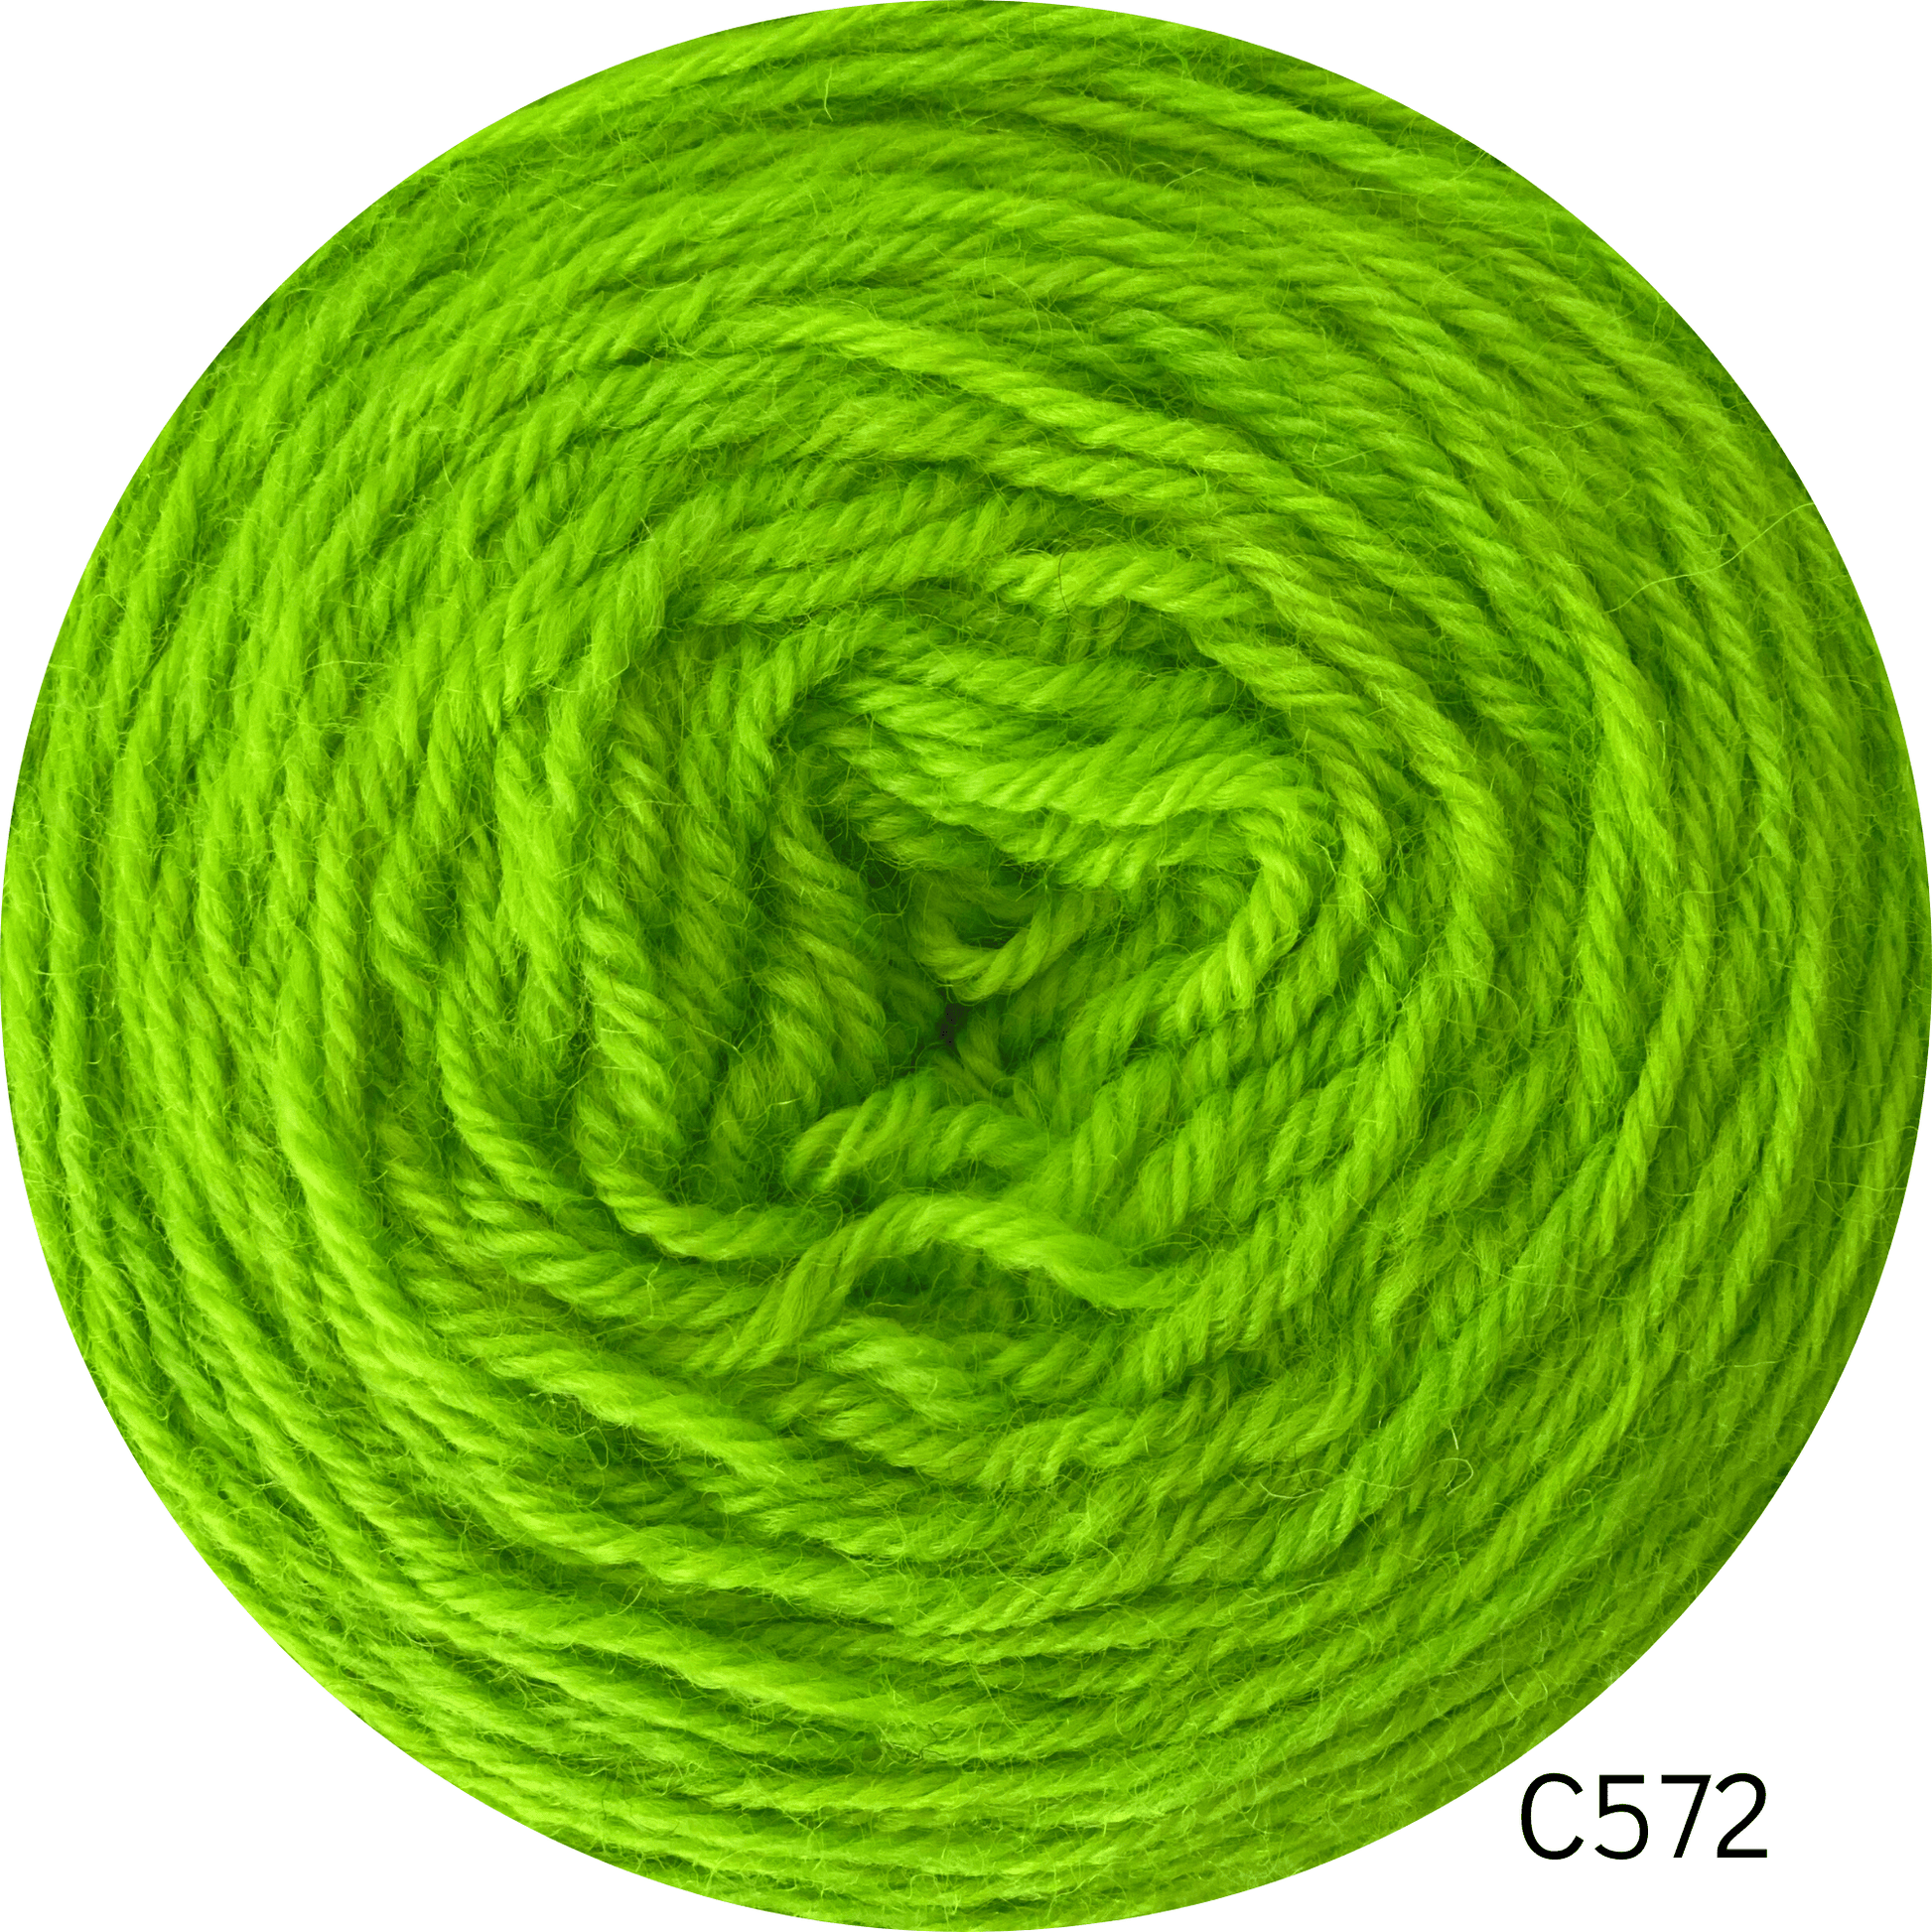 Lanabel Lana natural C572 lana natural delgada Verdes Lana natural